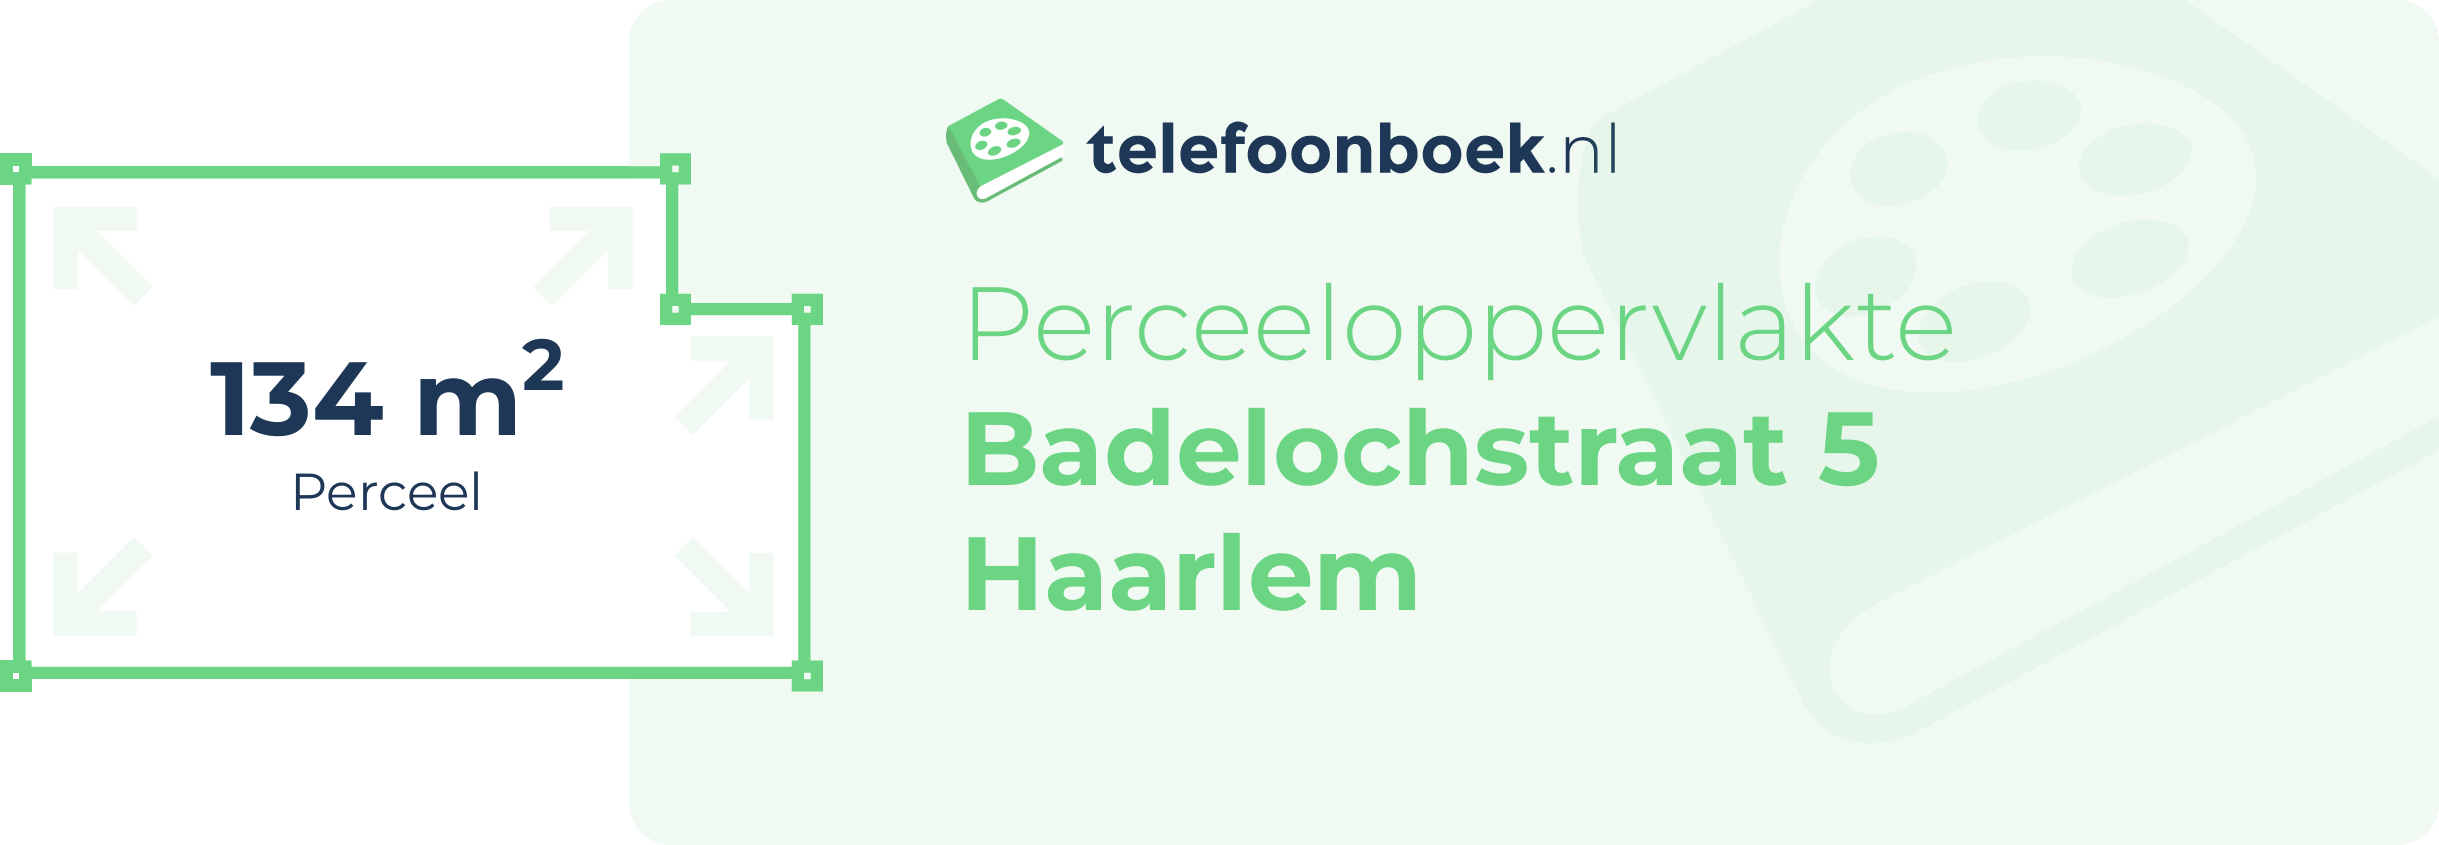 Perceeloppervlakte Badelochstraat 5 Haarlem